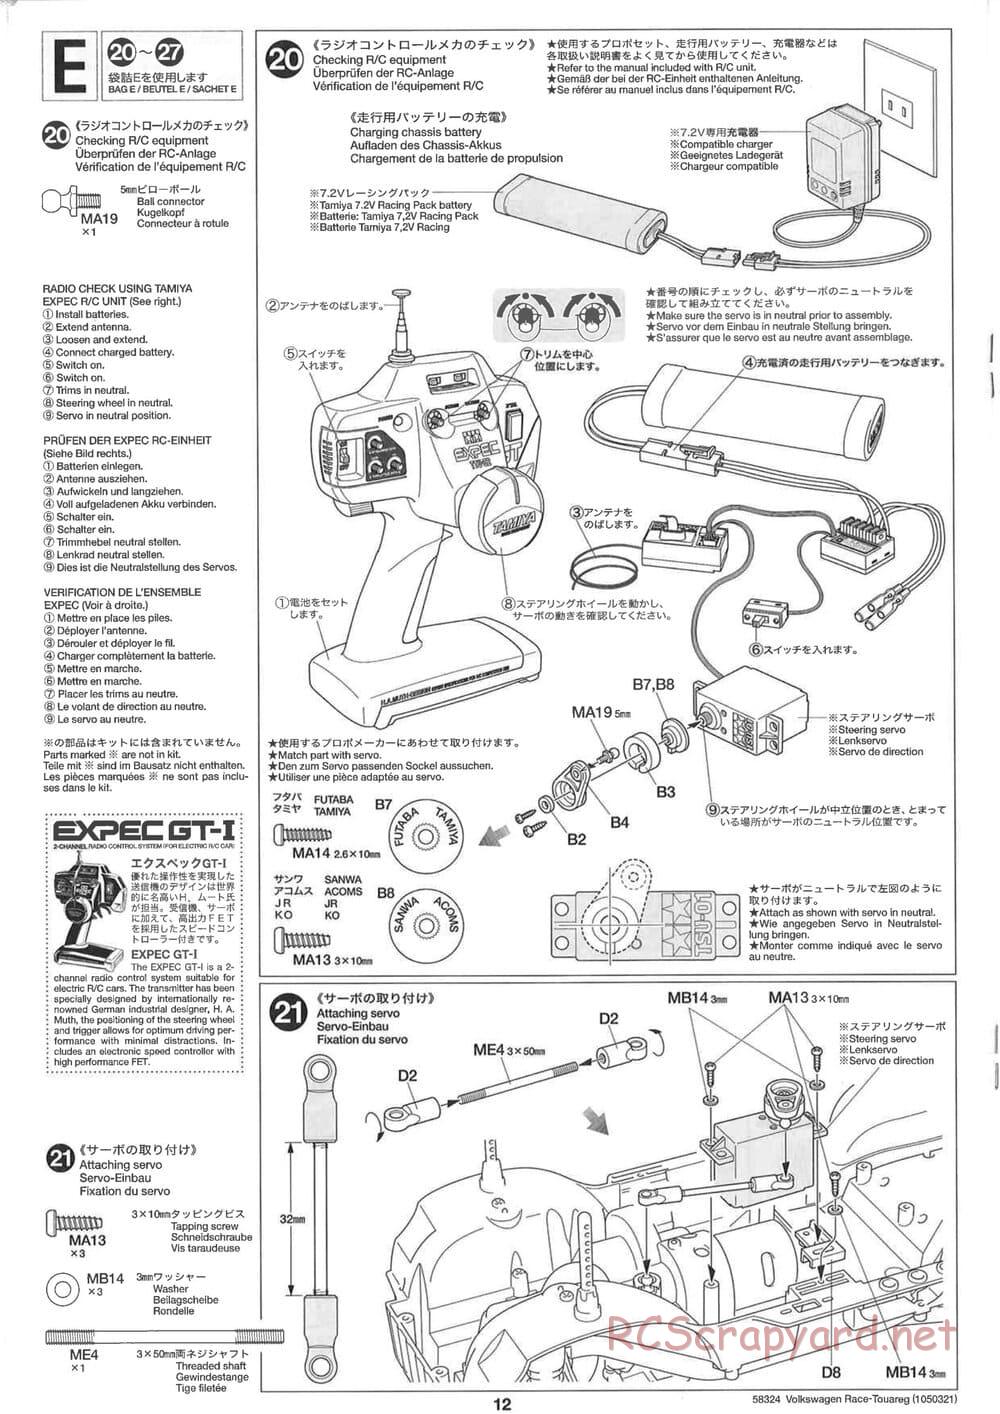 Tamiya - Volkswagen Race-Touareg - CC-01 Chassis - Manual - Page 12